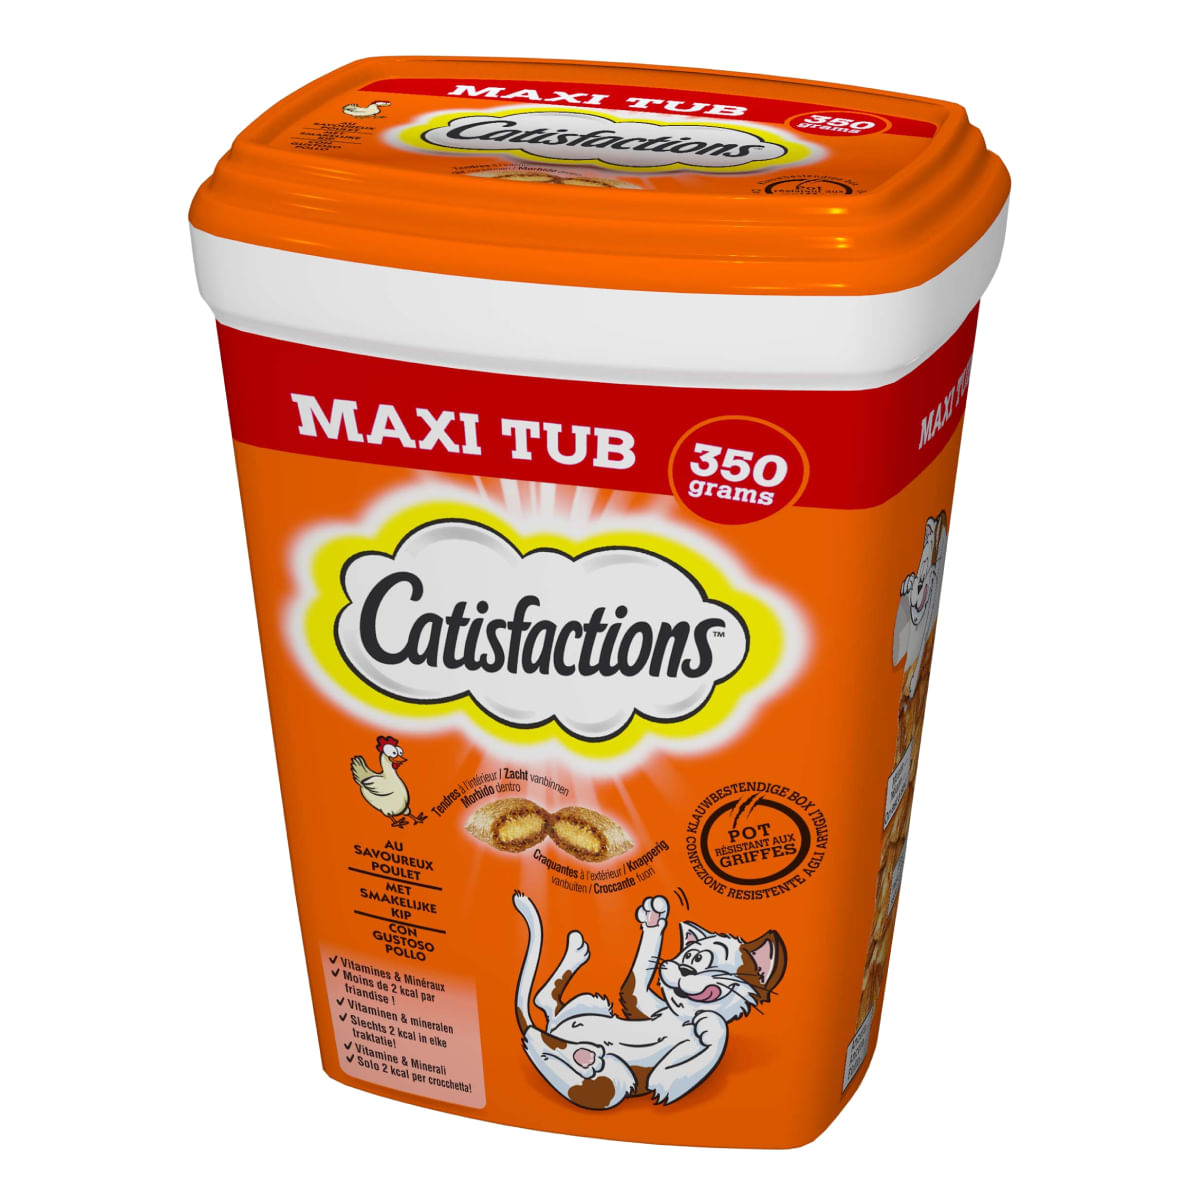 2x Catisfactions Maxi Tub con Pollo 350gr